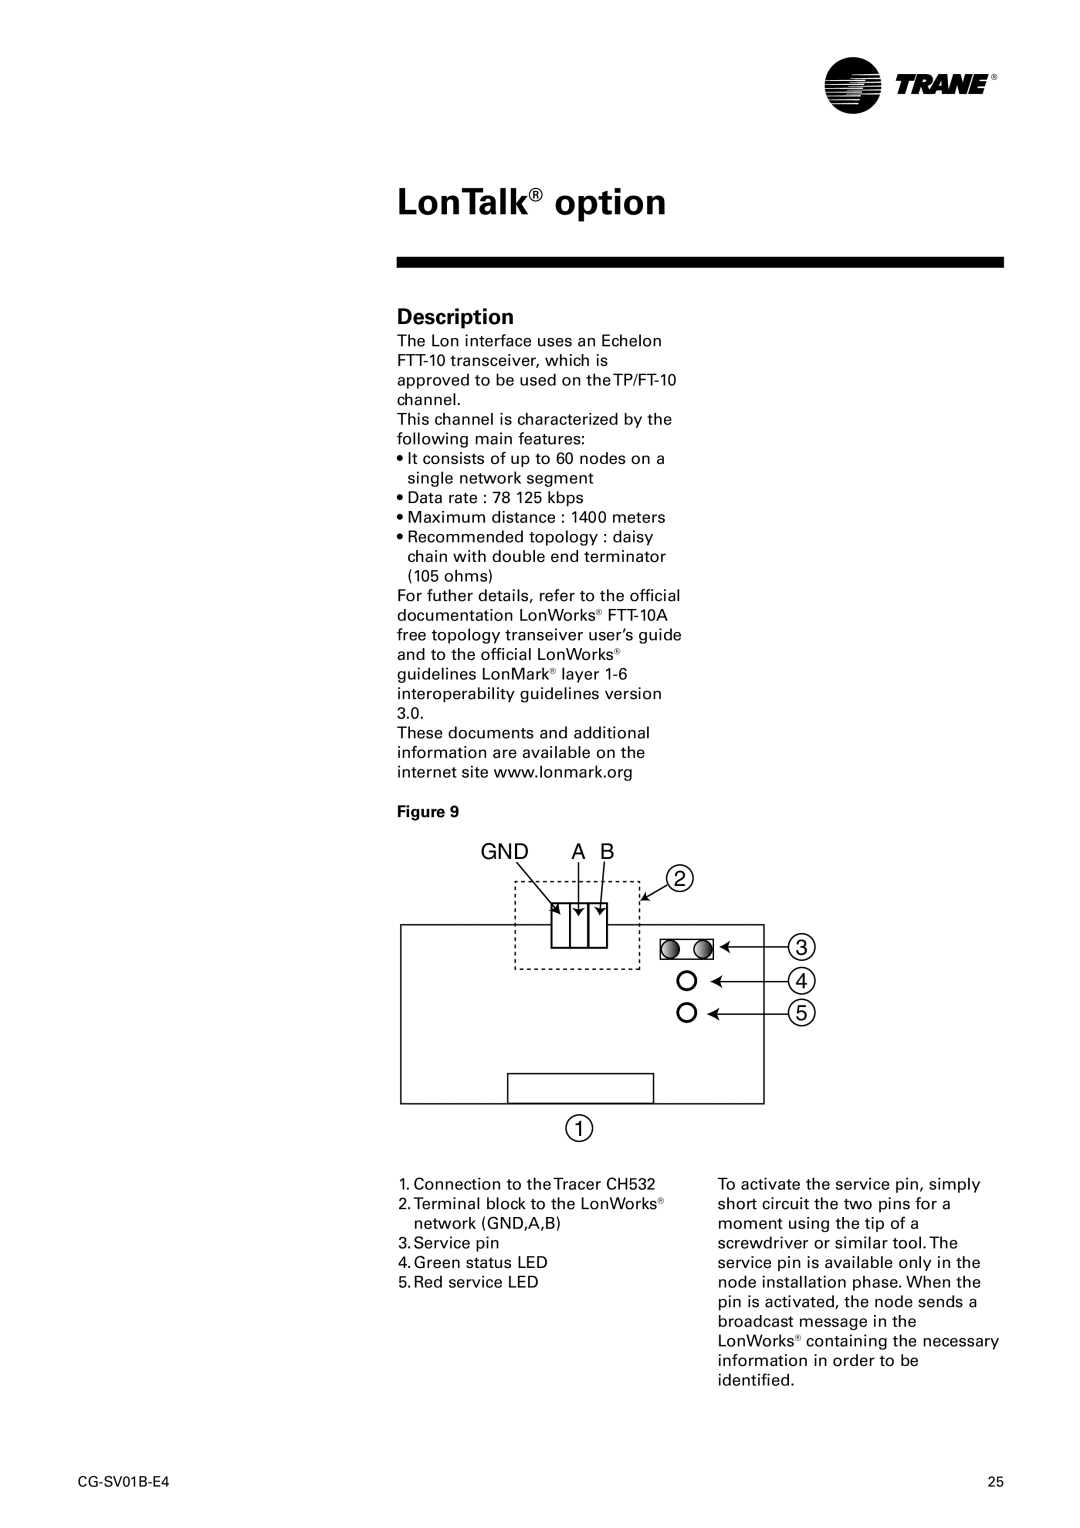 American Standard TRACER CH532 manual LonTalk option, Description, Gnd A B 